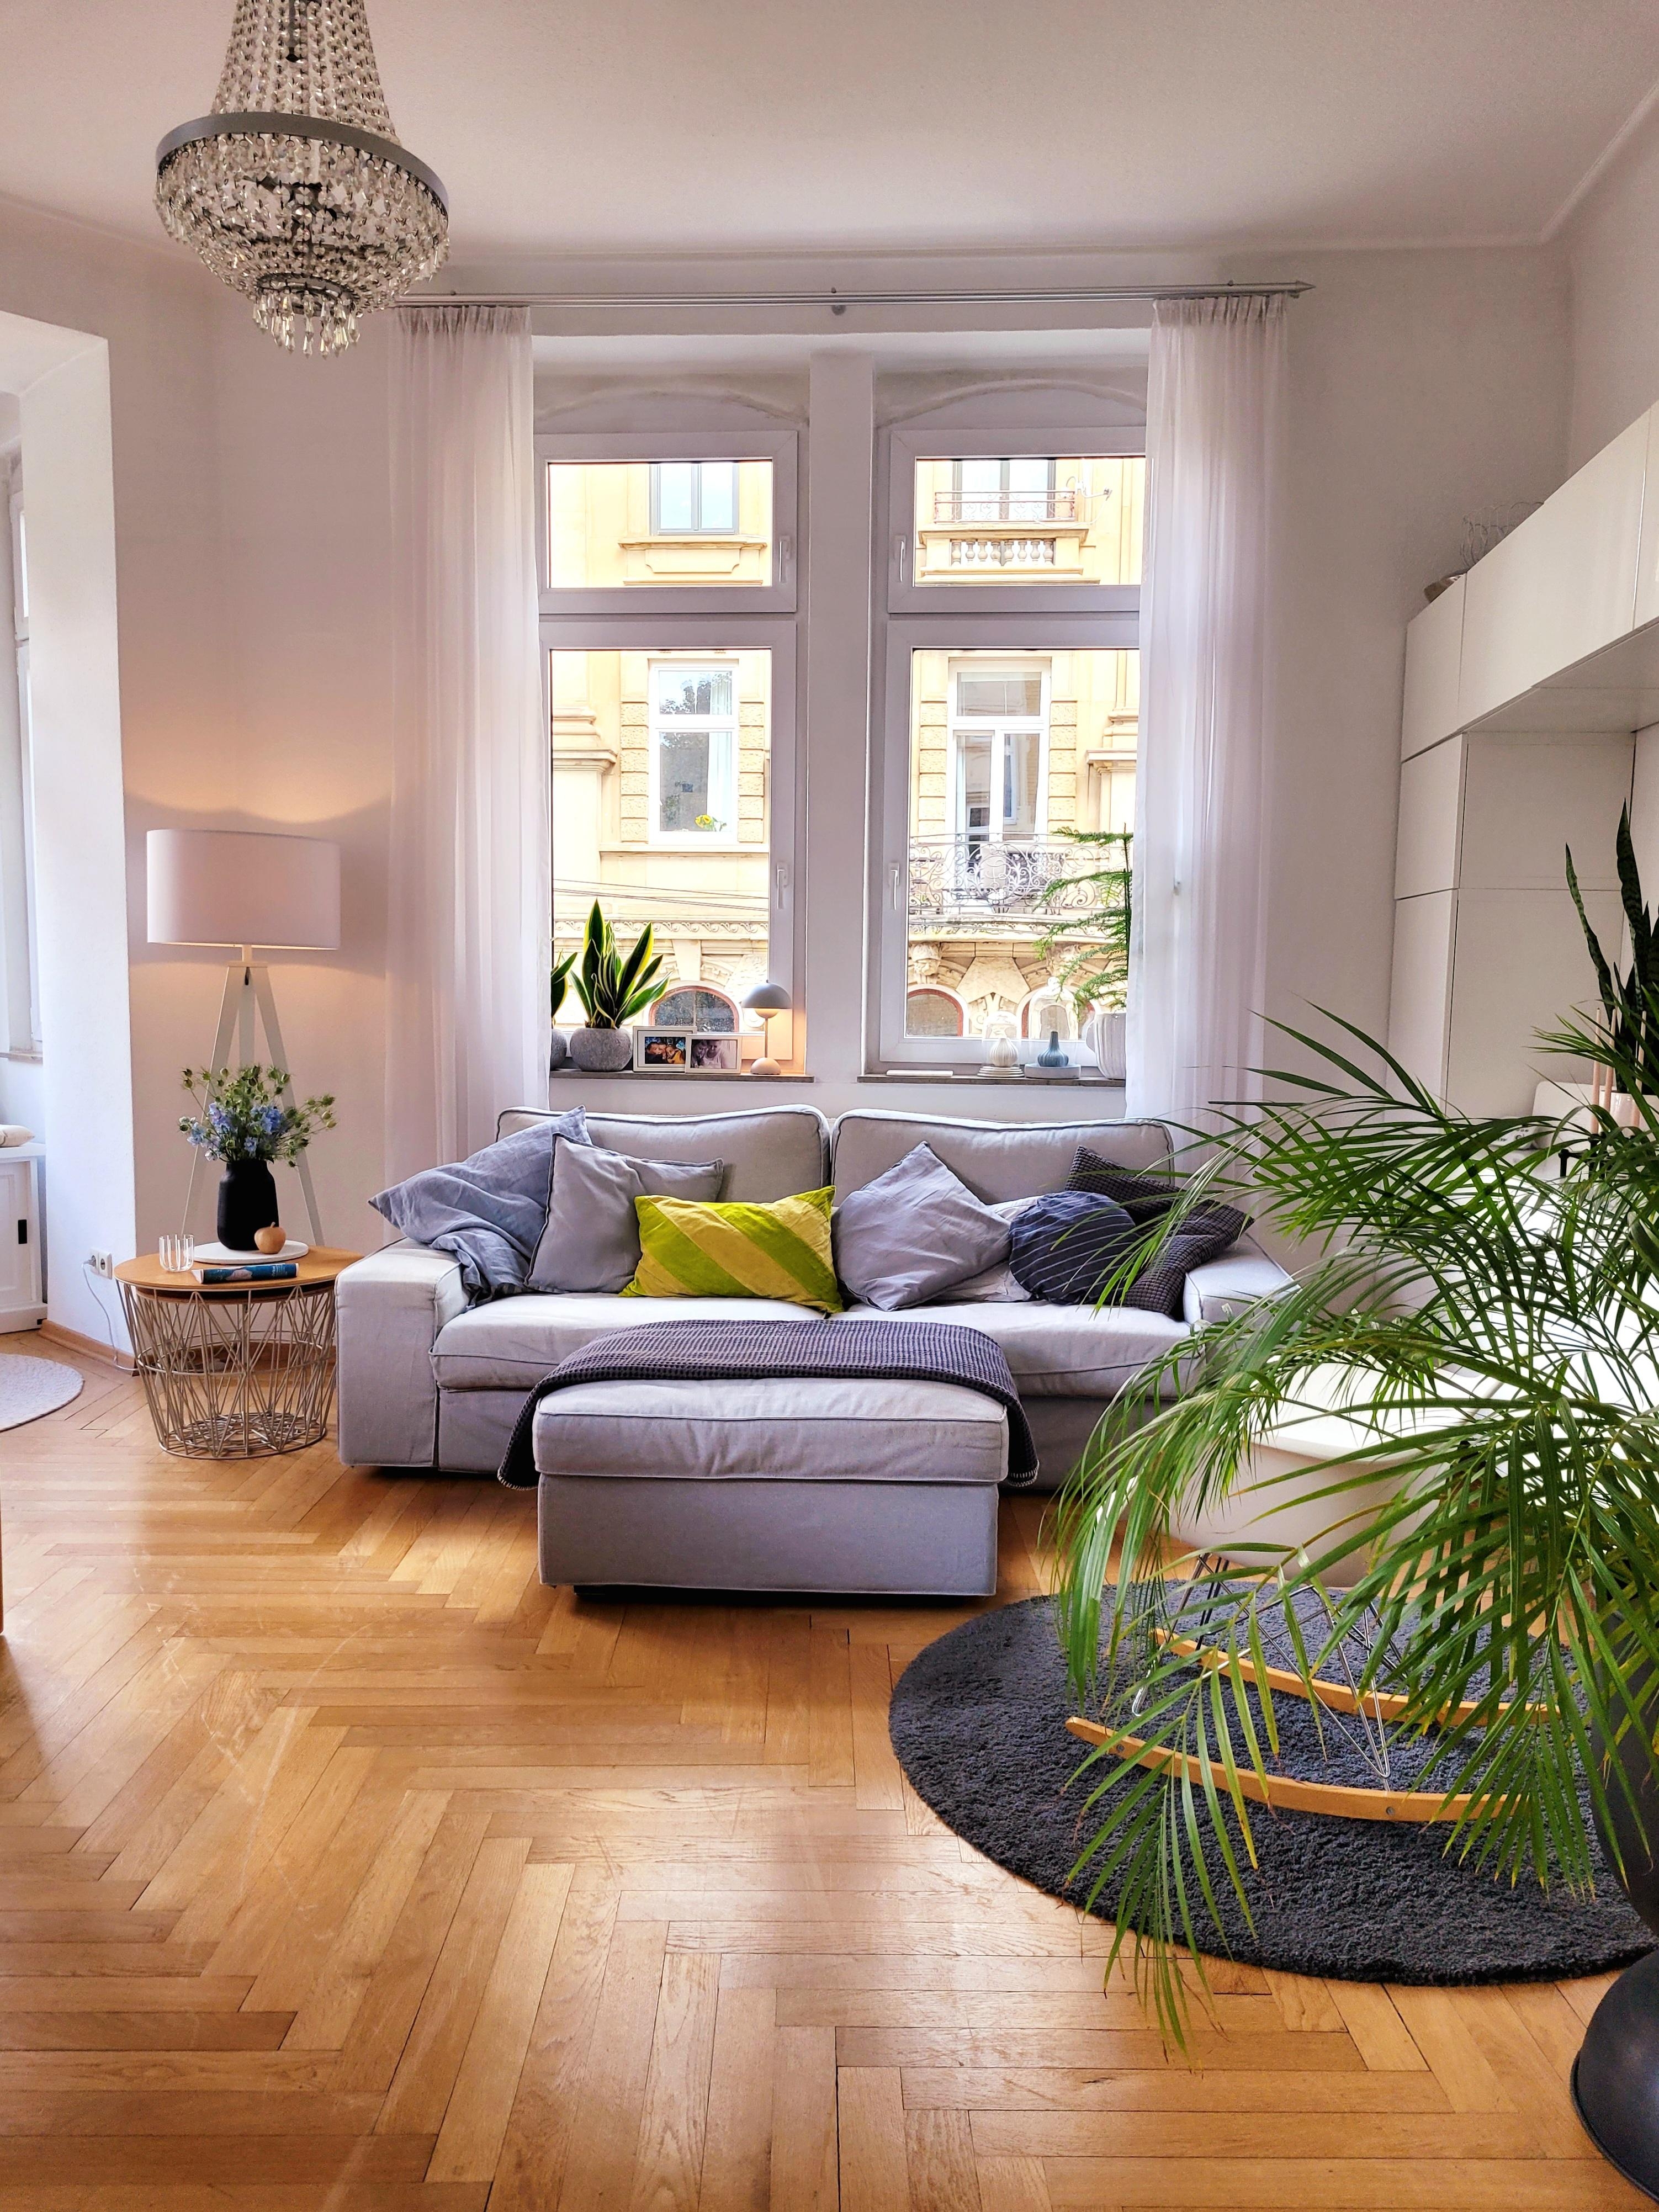 Das gemütlichste Möbelstücke an harten Tagen!
#livingroom #Altbau #skandi #ikea #vitra #fermliving #Sofa #Tisch #lampe